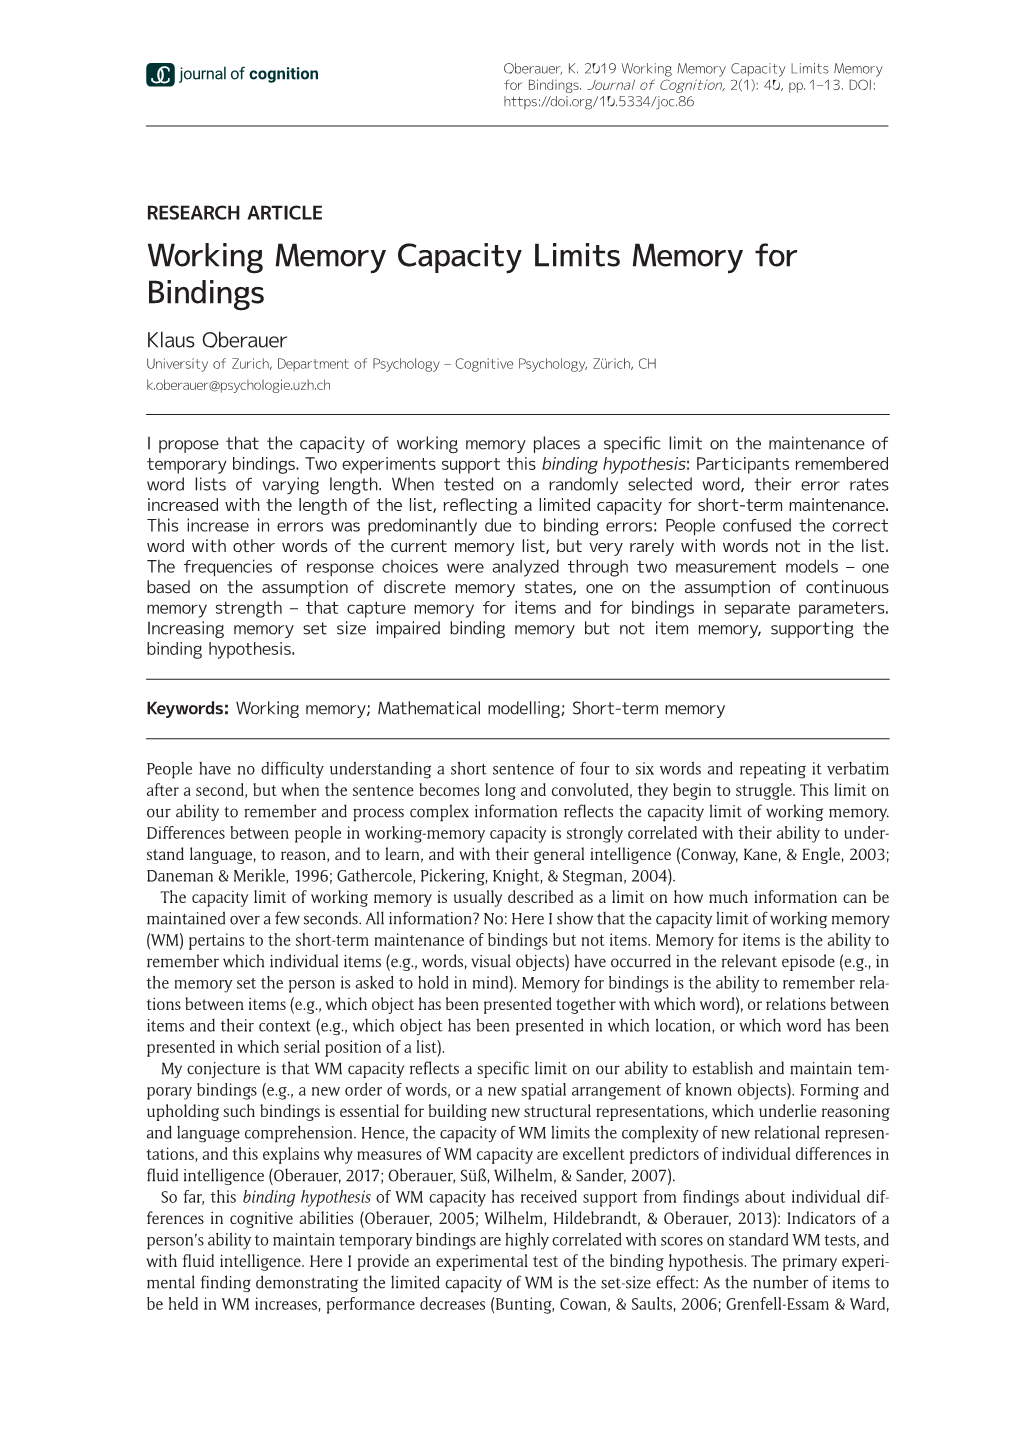 Working Memory Capacity Limits Memory for Bindings